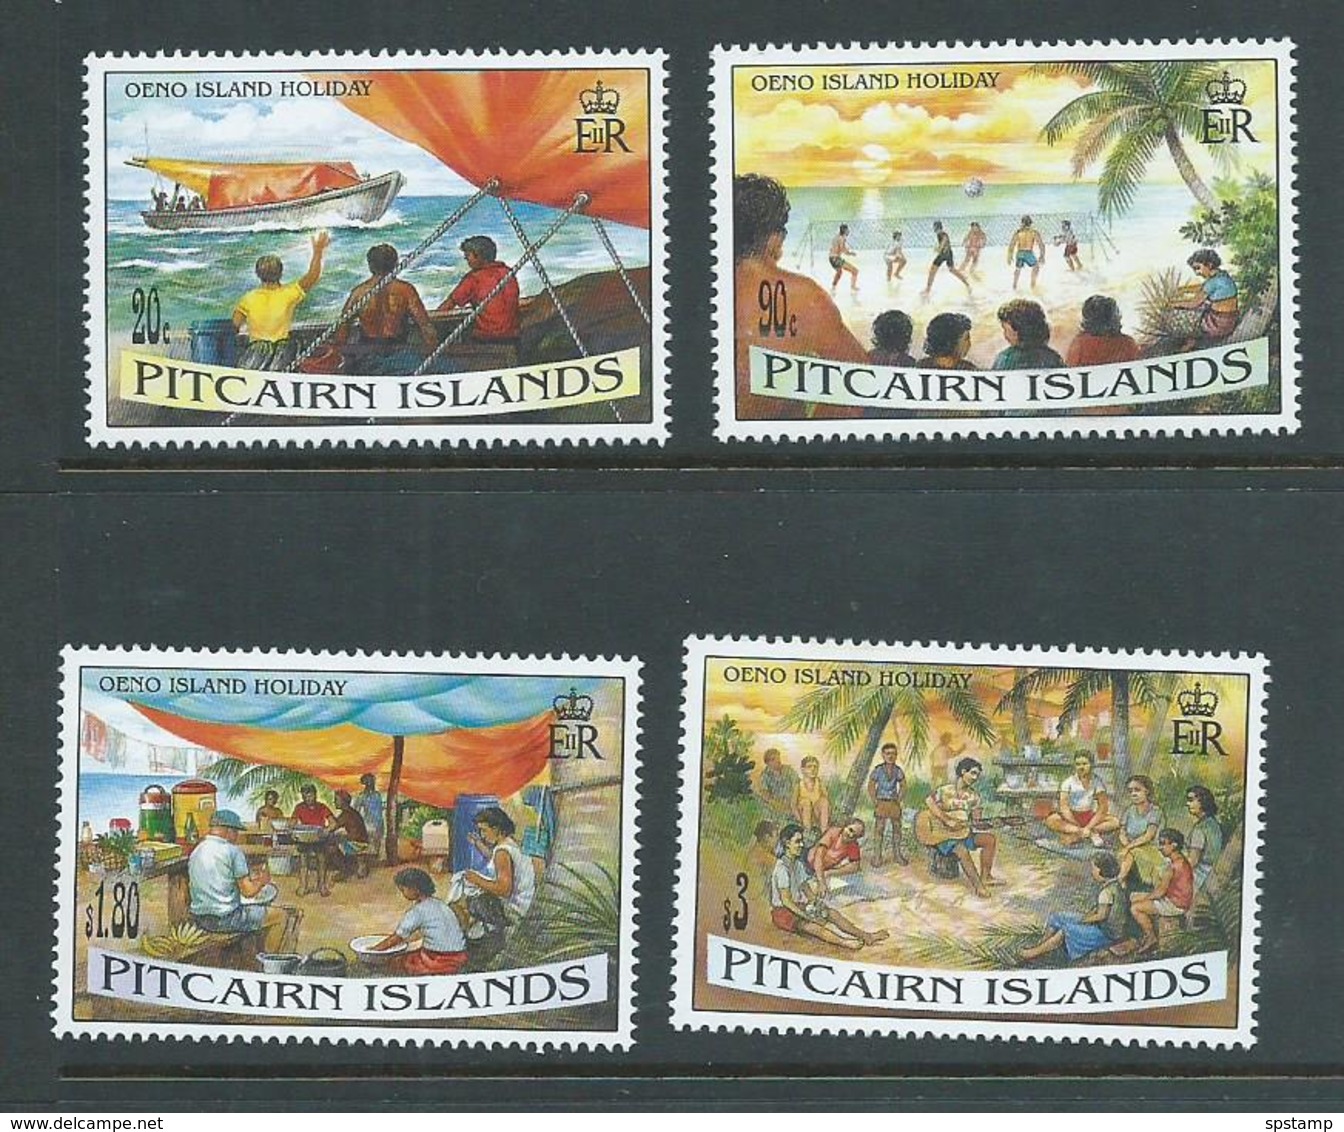 Pitcairn Islands 1995 Oeno Island Holidays Set 4 MNH - Pitcairn Islands